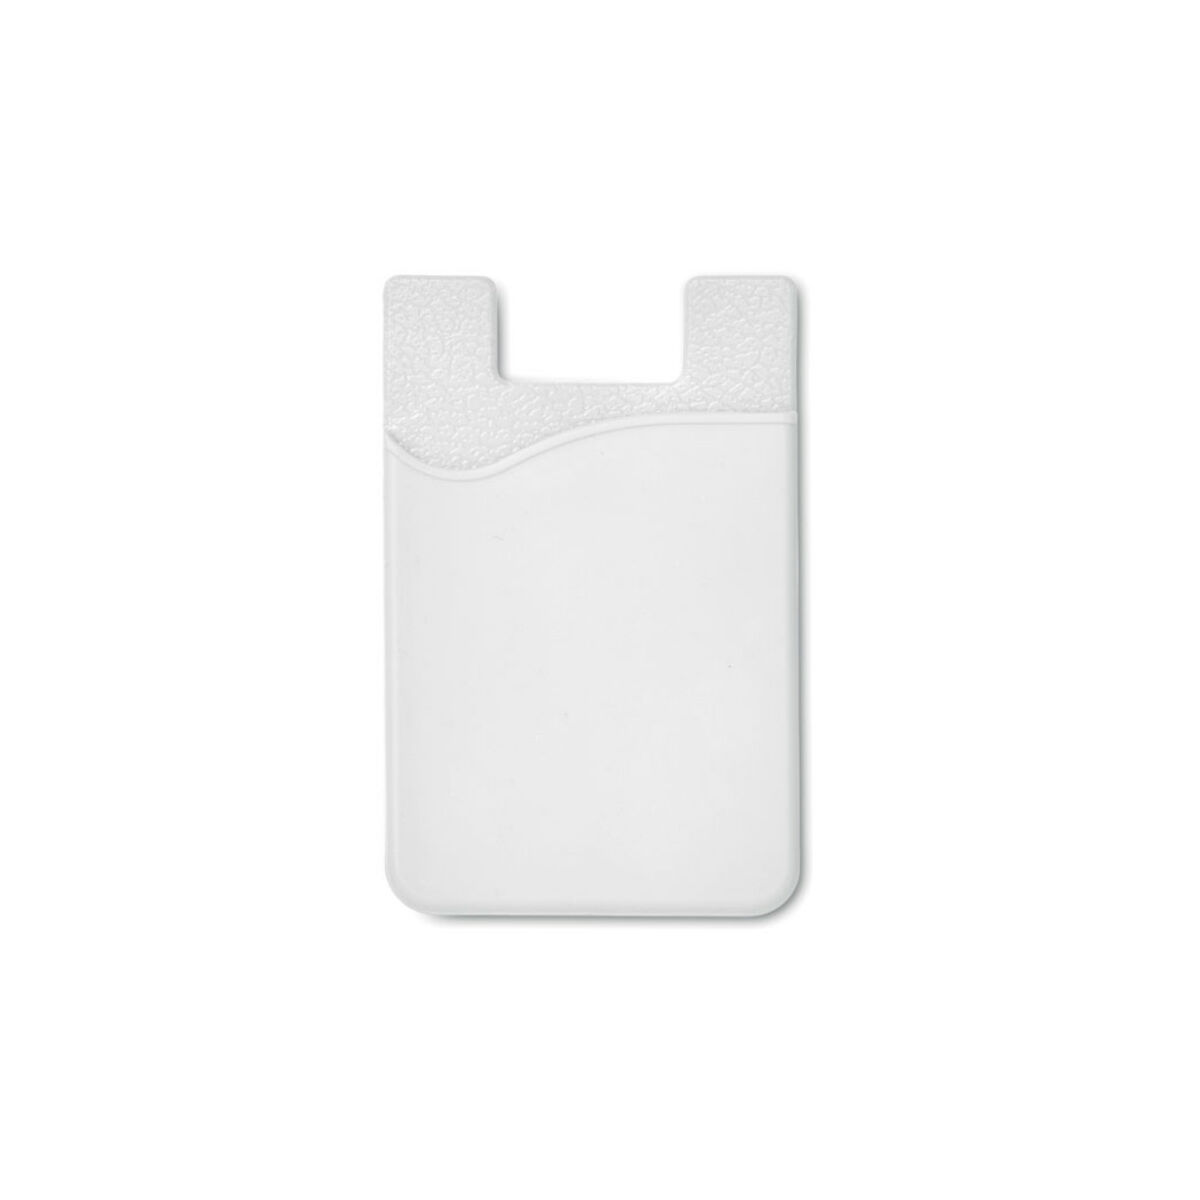 Smartphone Cardholder (White)